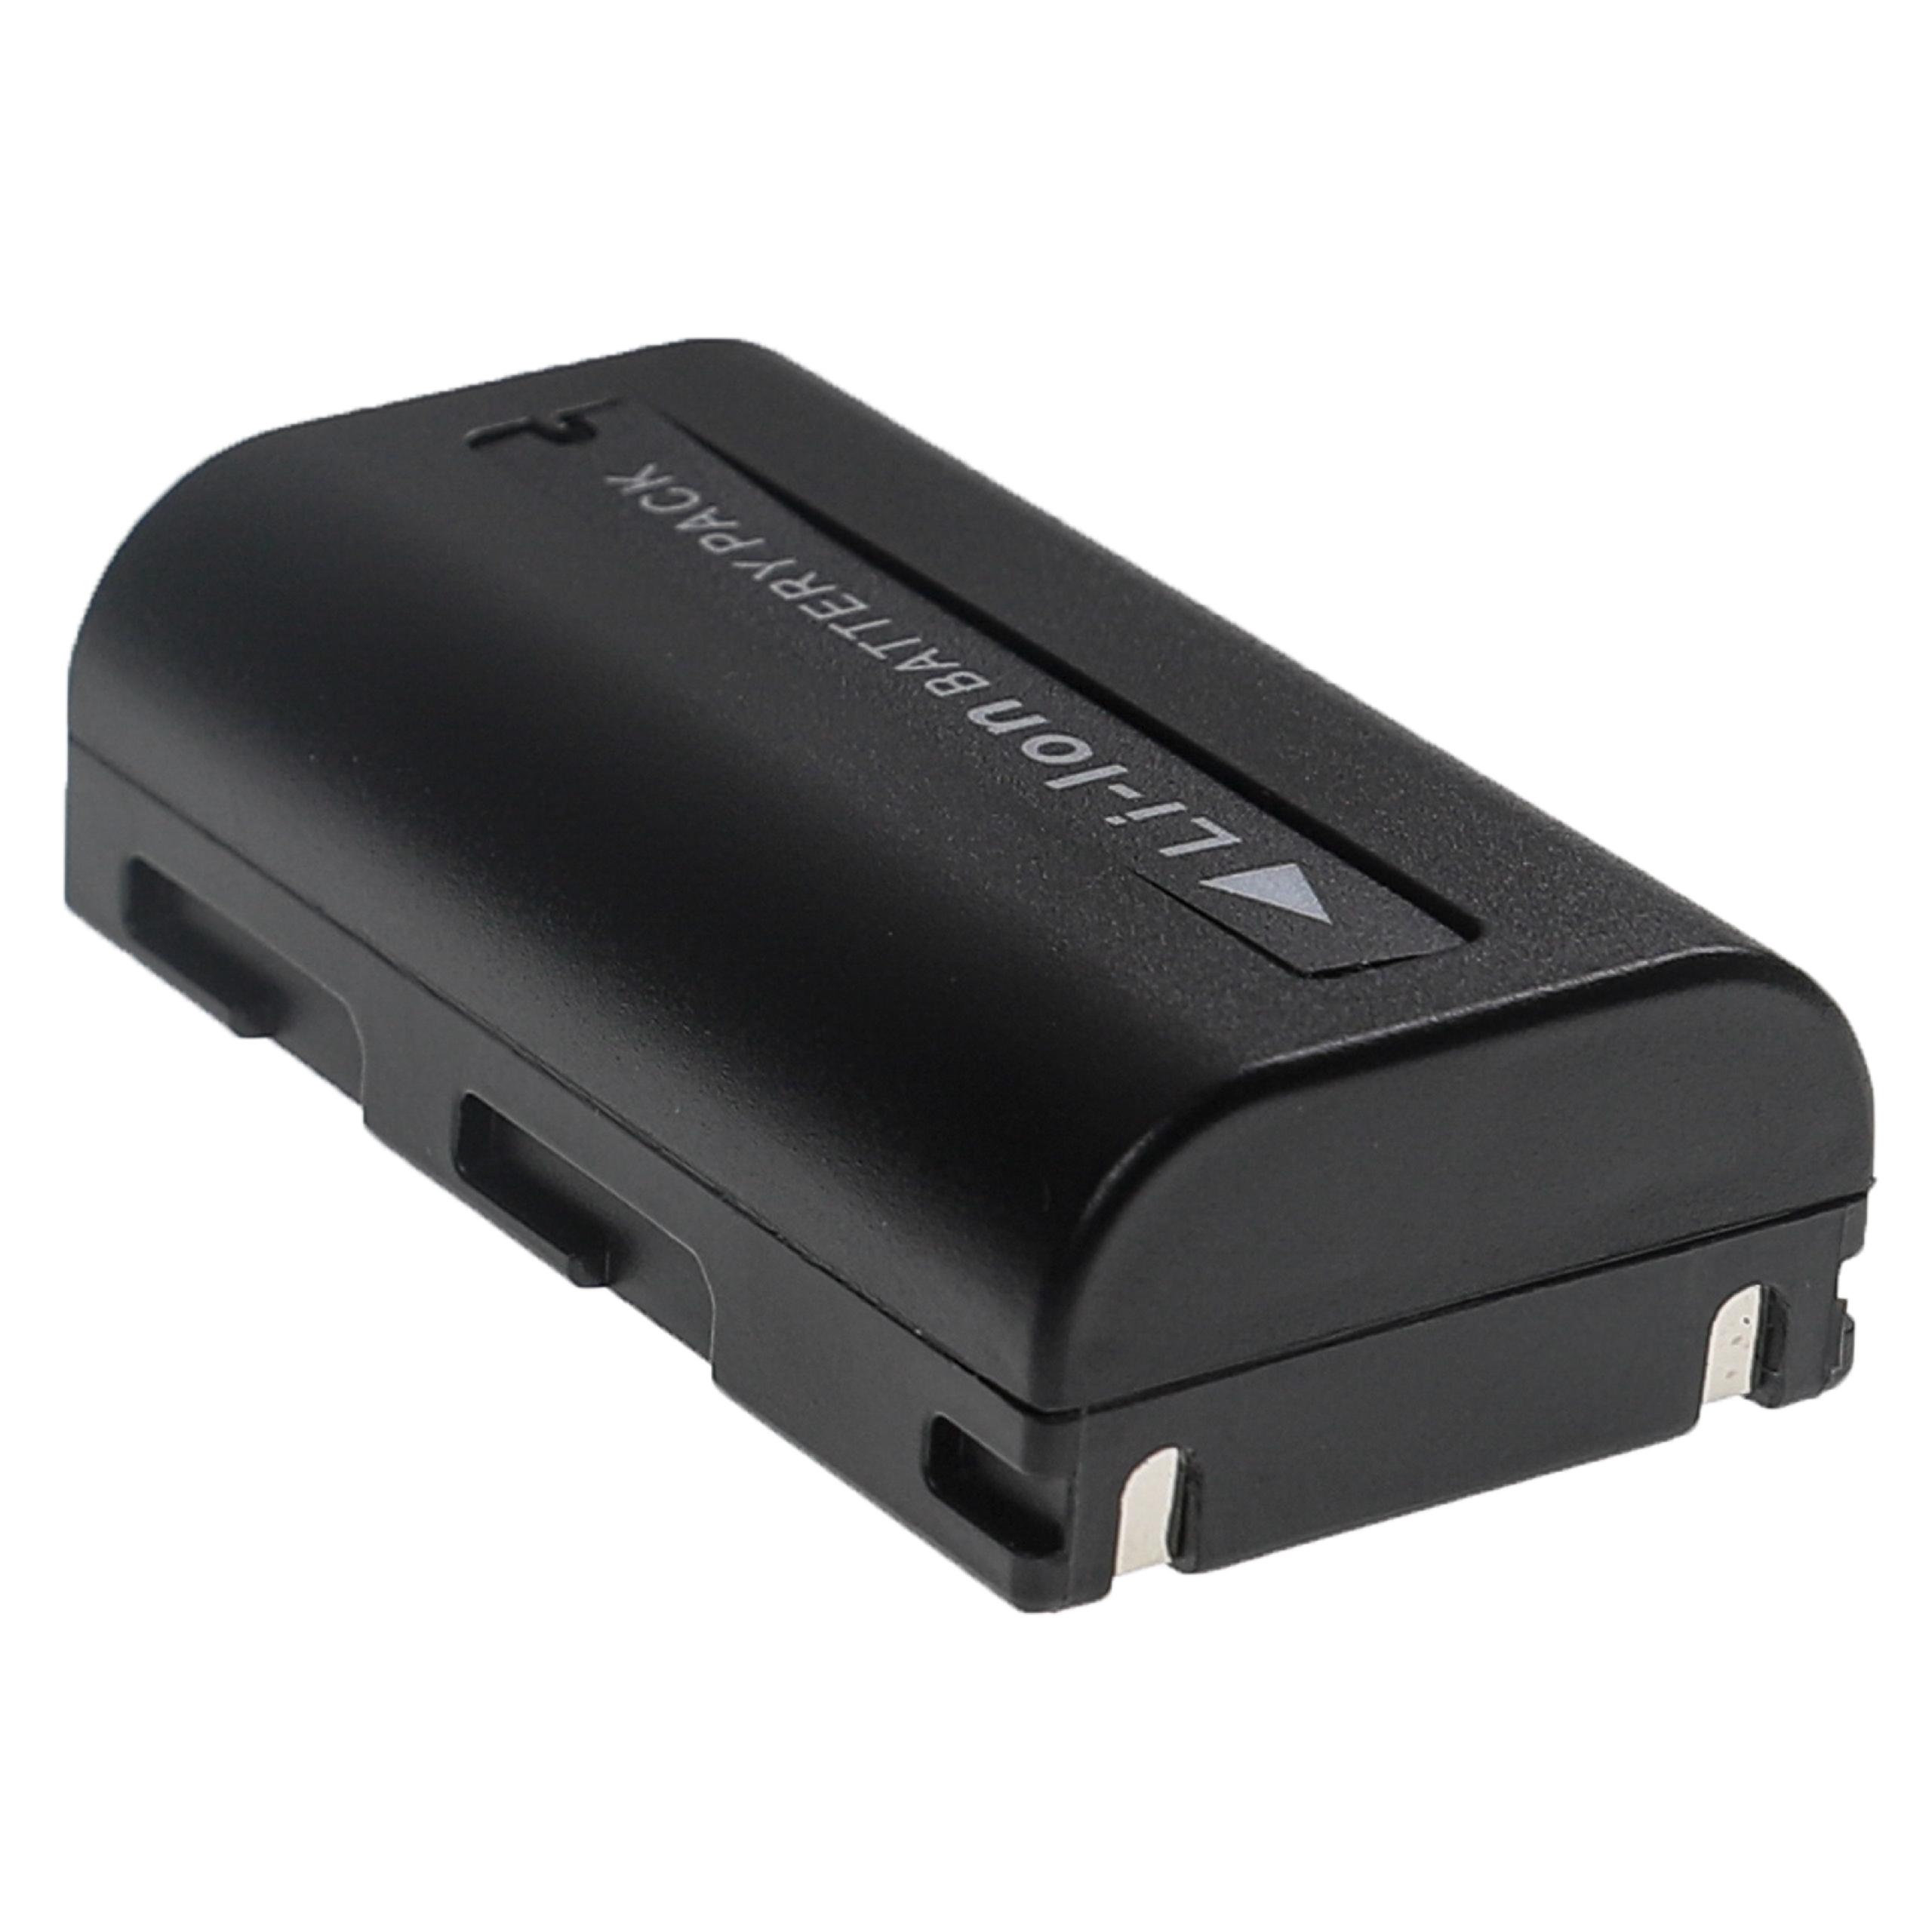 Akumulator do kamery cyfrowej / wideo zamiennik Samsung SB-LSM80, SB-LSM320, SB-LSM160 - 800 mAh 7,4 V Li-Ion